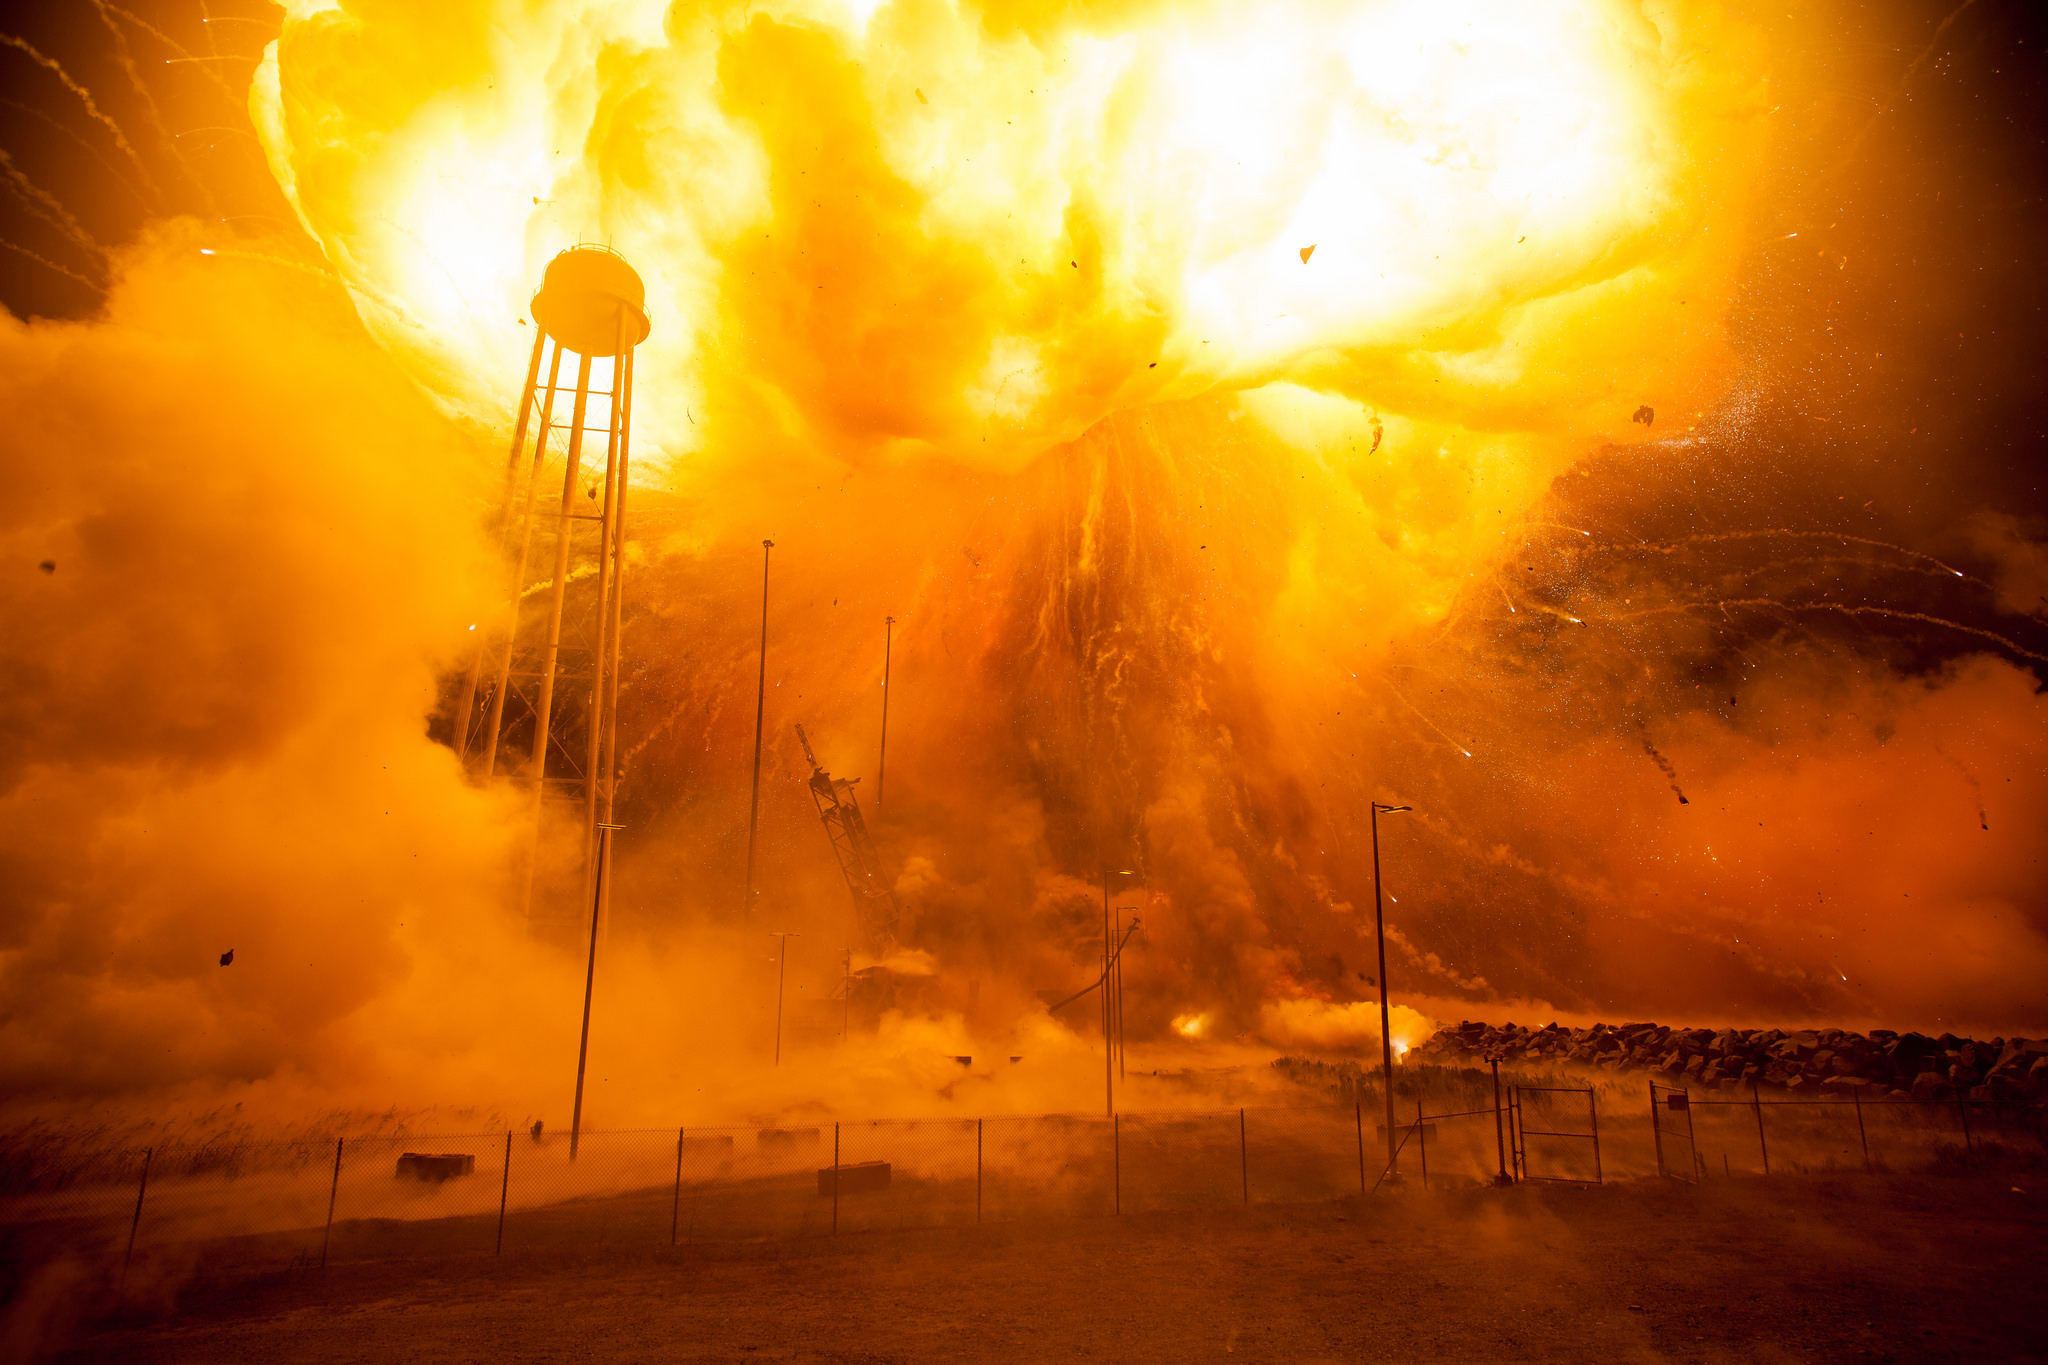 NASA Releases Harrowing New Photos Of Last Year’s Antares Rocket Explosion